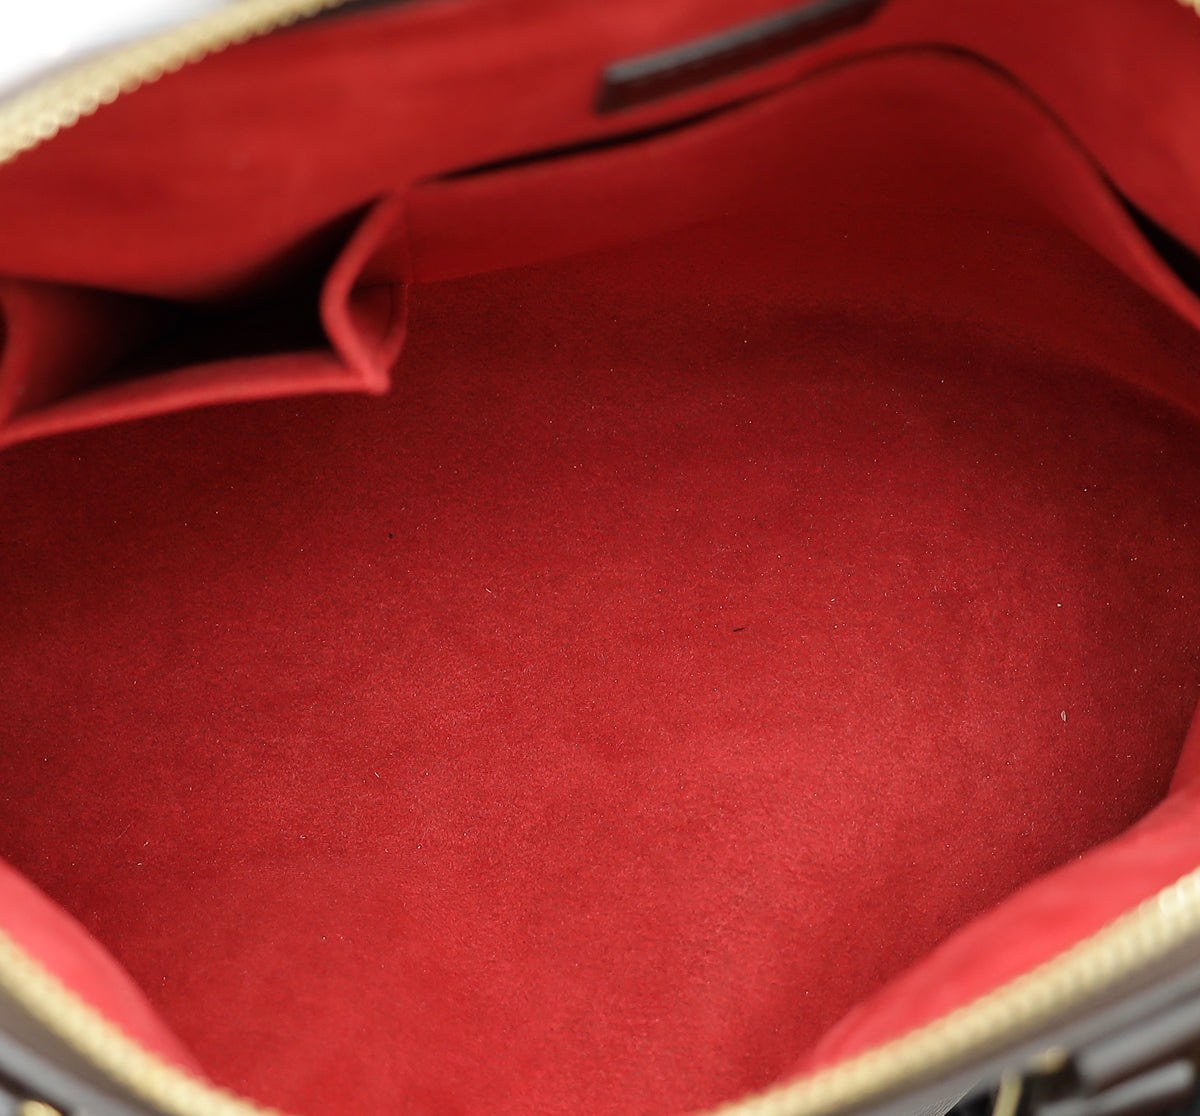 Louis Vuitton Trevi Handbag 367265